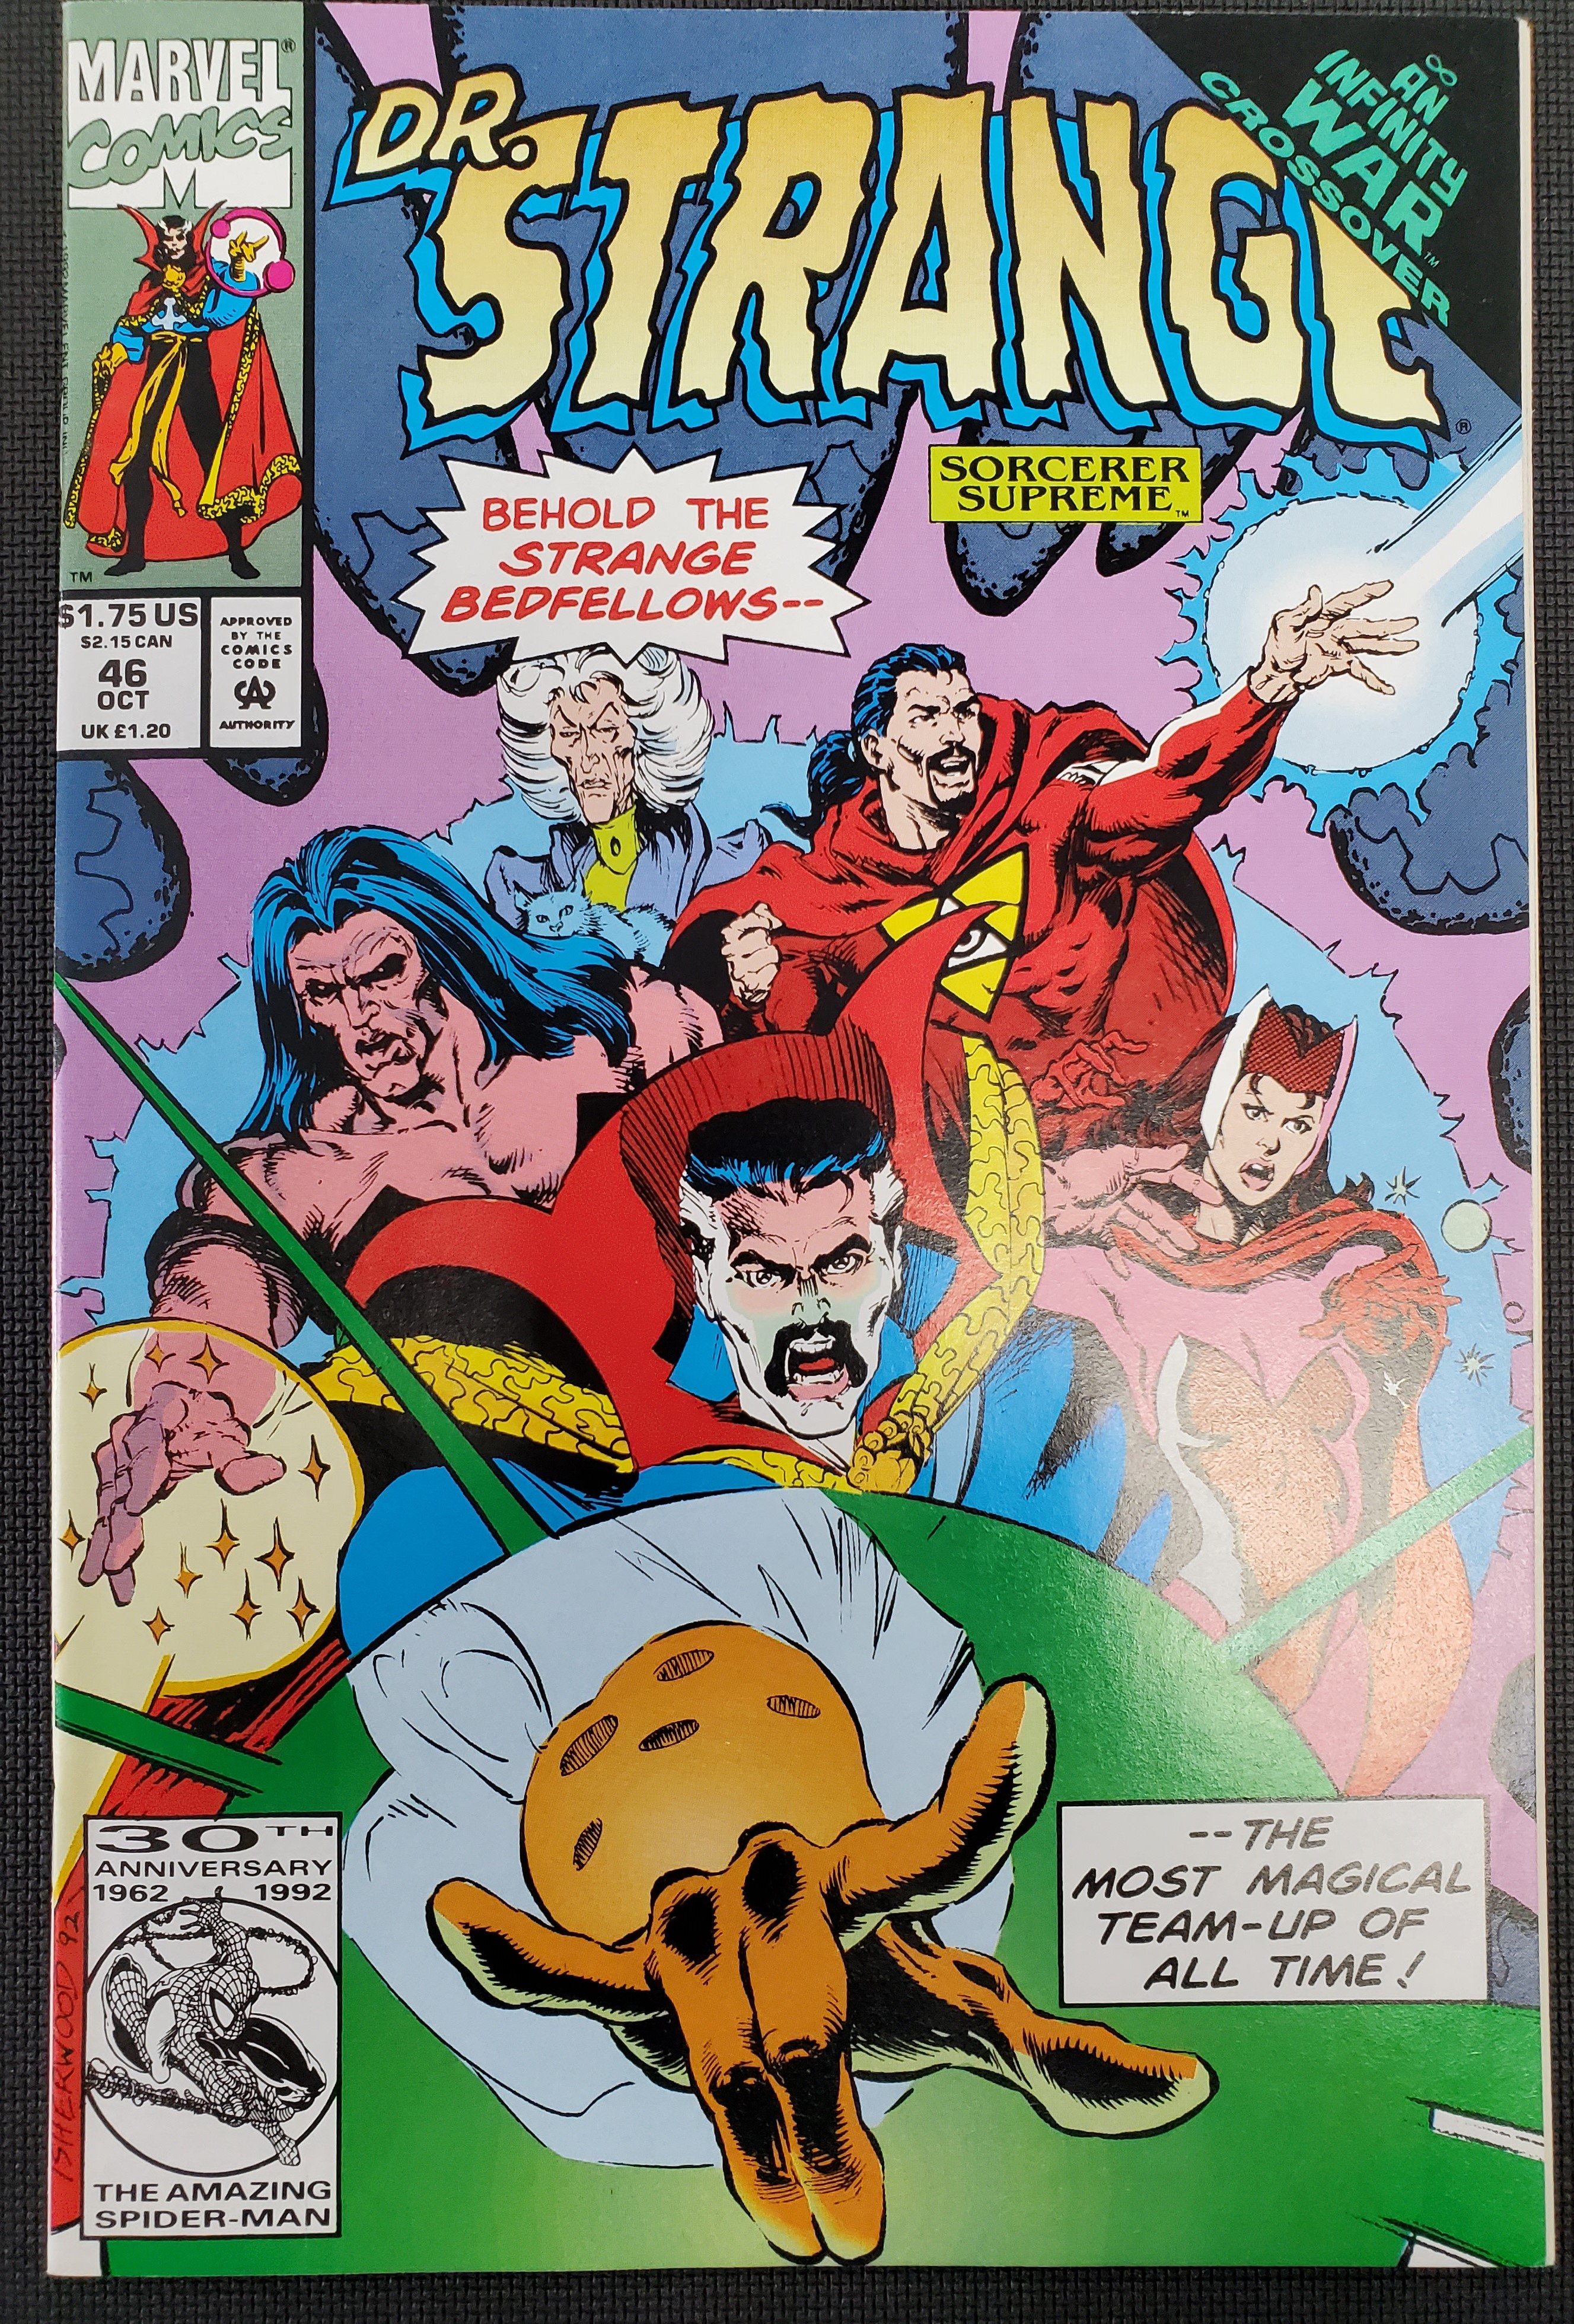 Doctor Strange #46 (Marvel 1988)